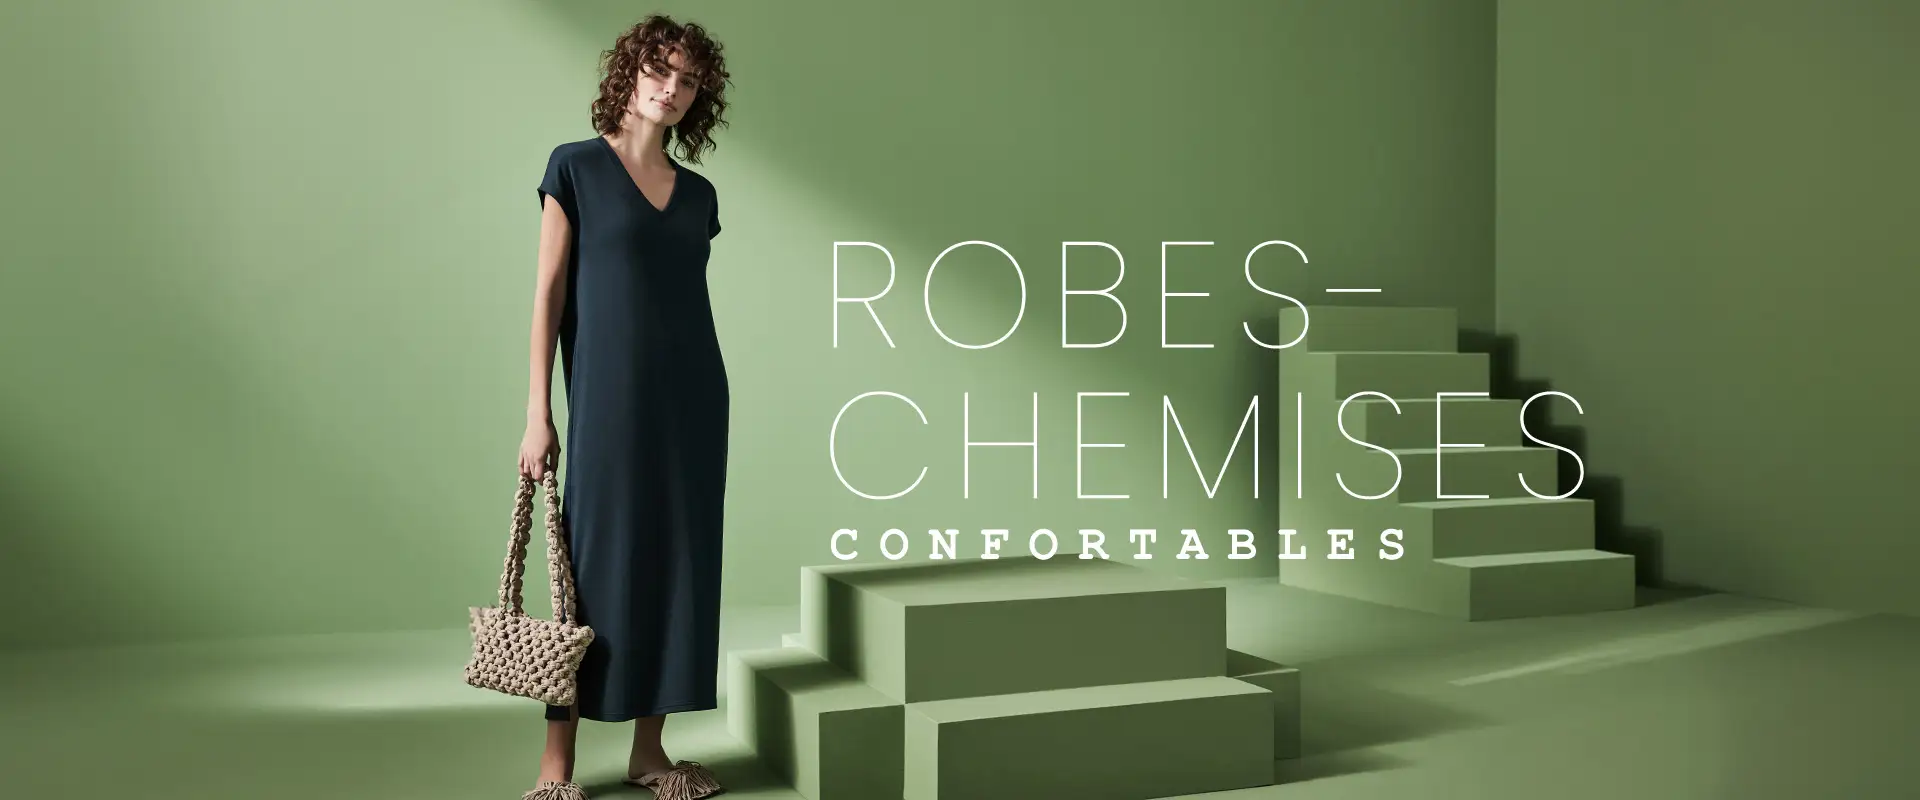 Robes-chemises confortables